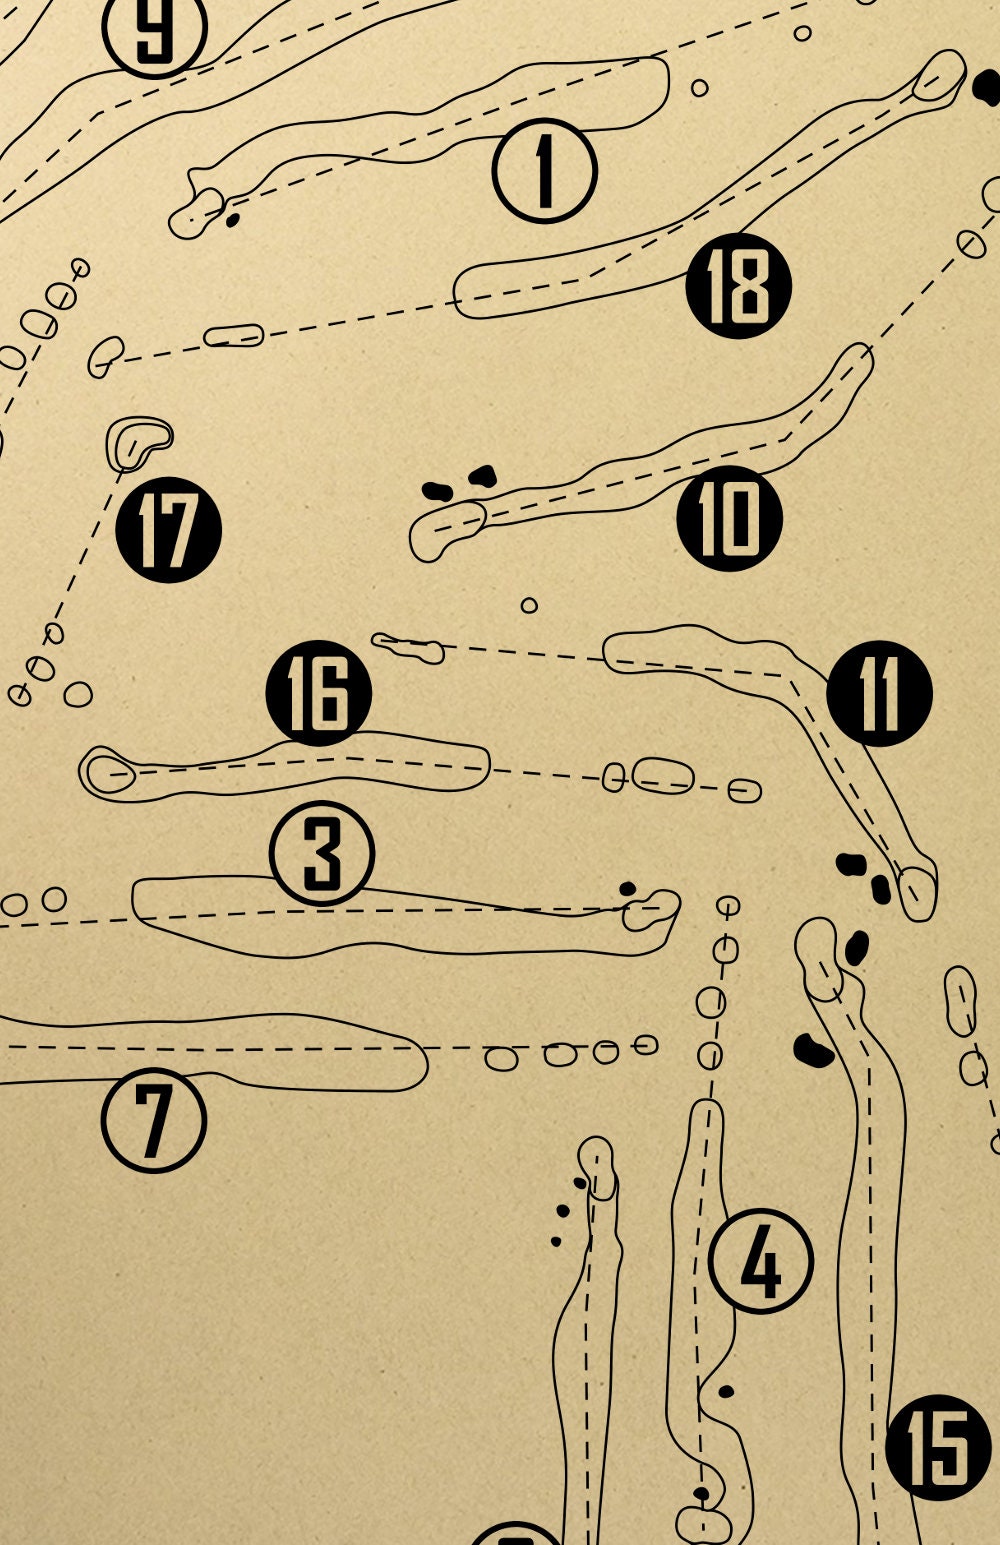 Gold Mountain Golf Club Outline (Print)